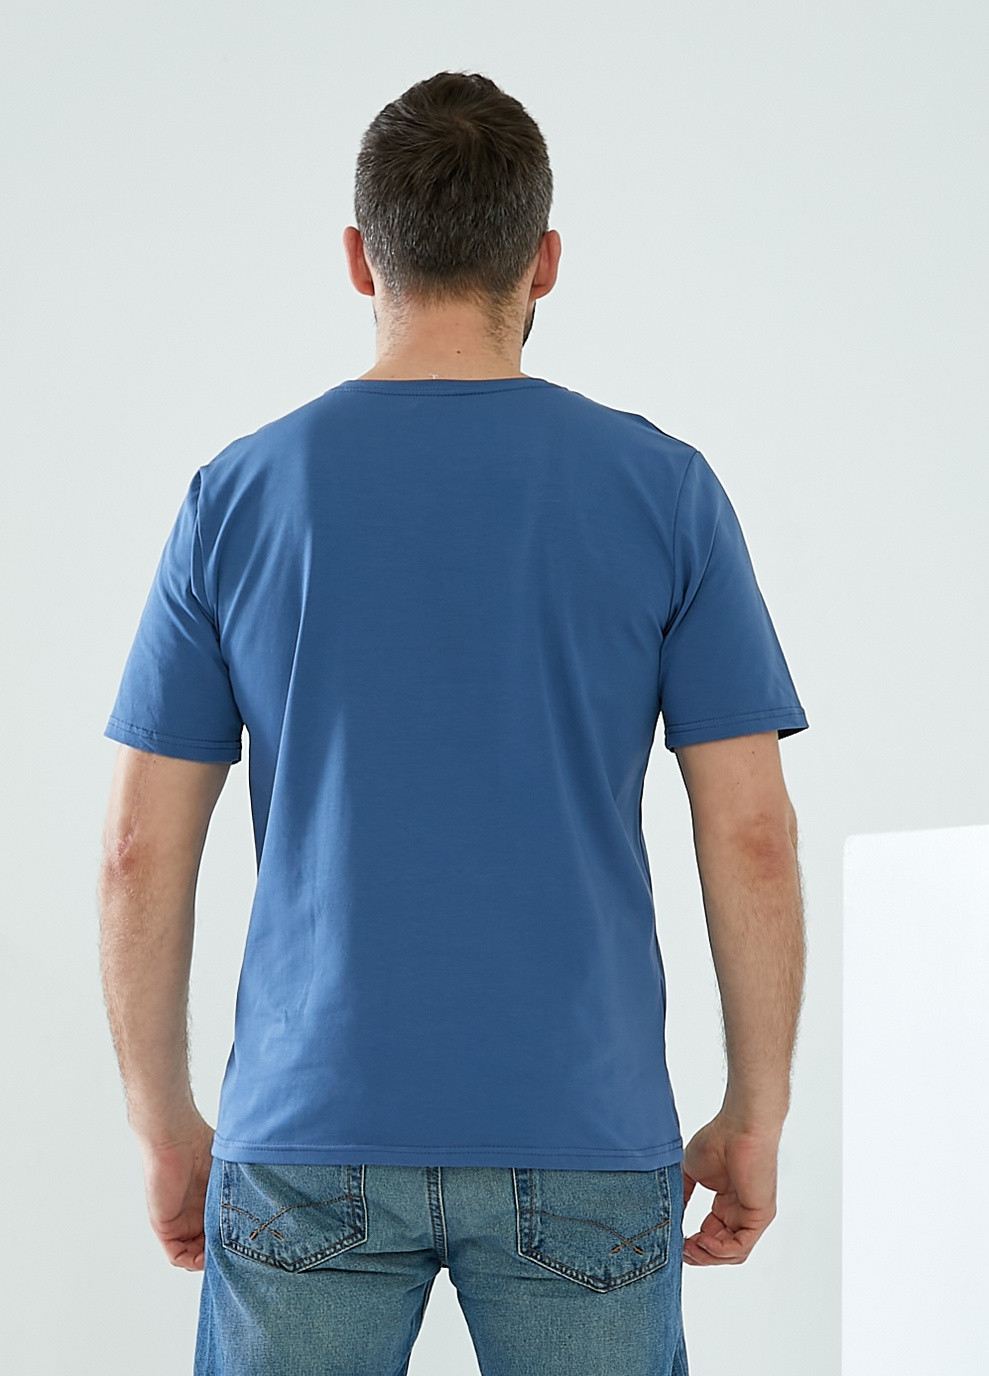 Синяя футболка из стрейч трикотажа Tailer